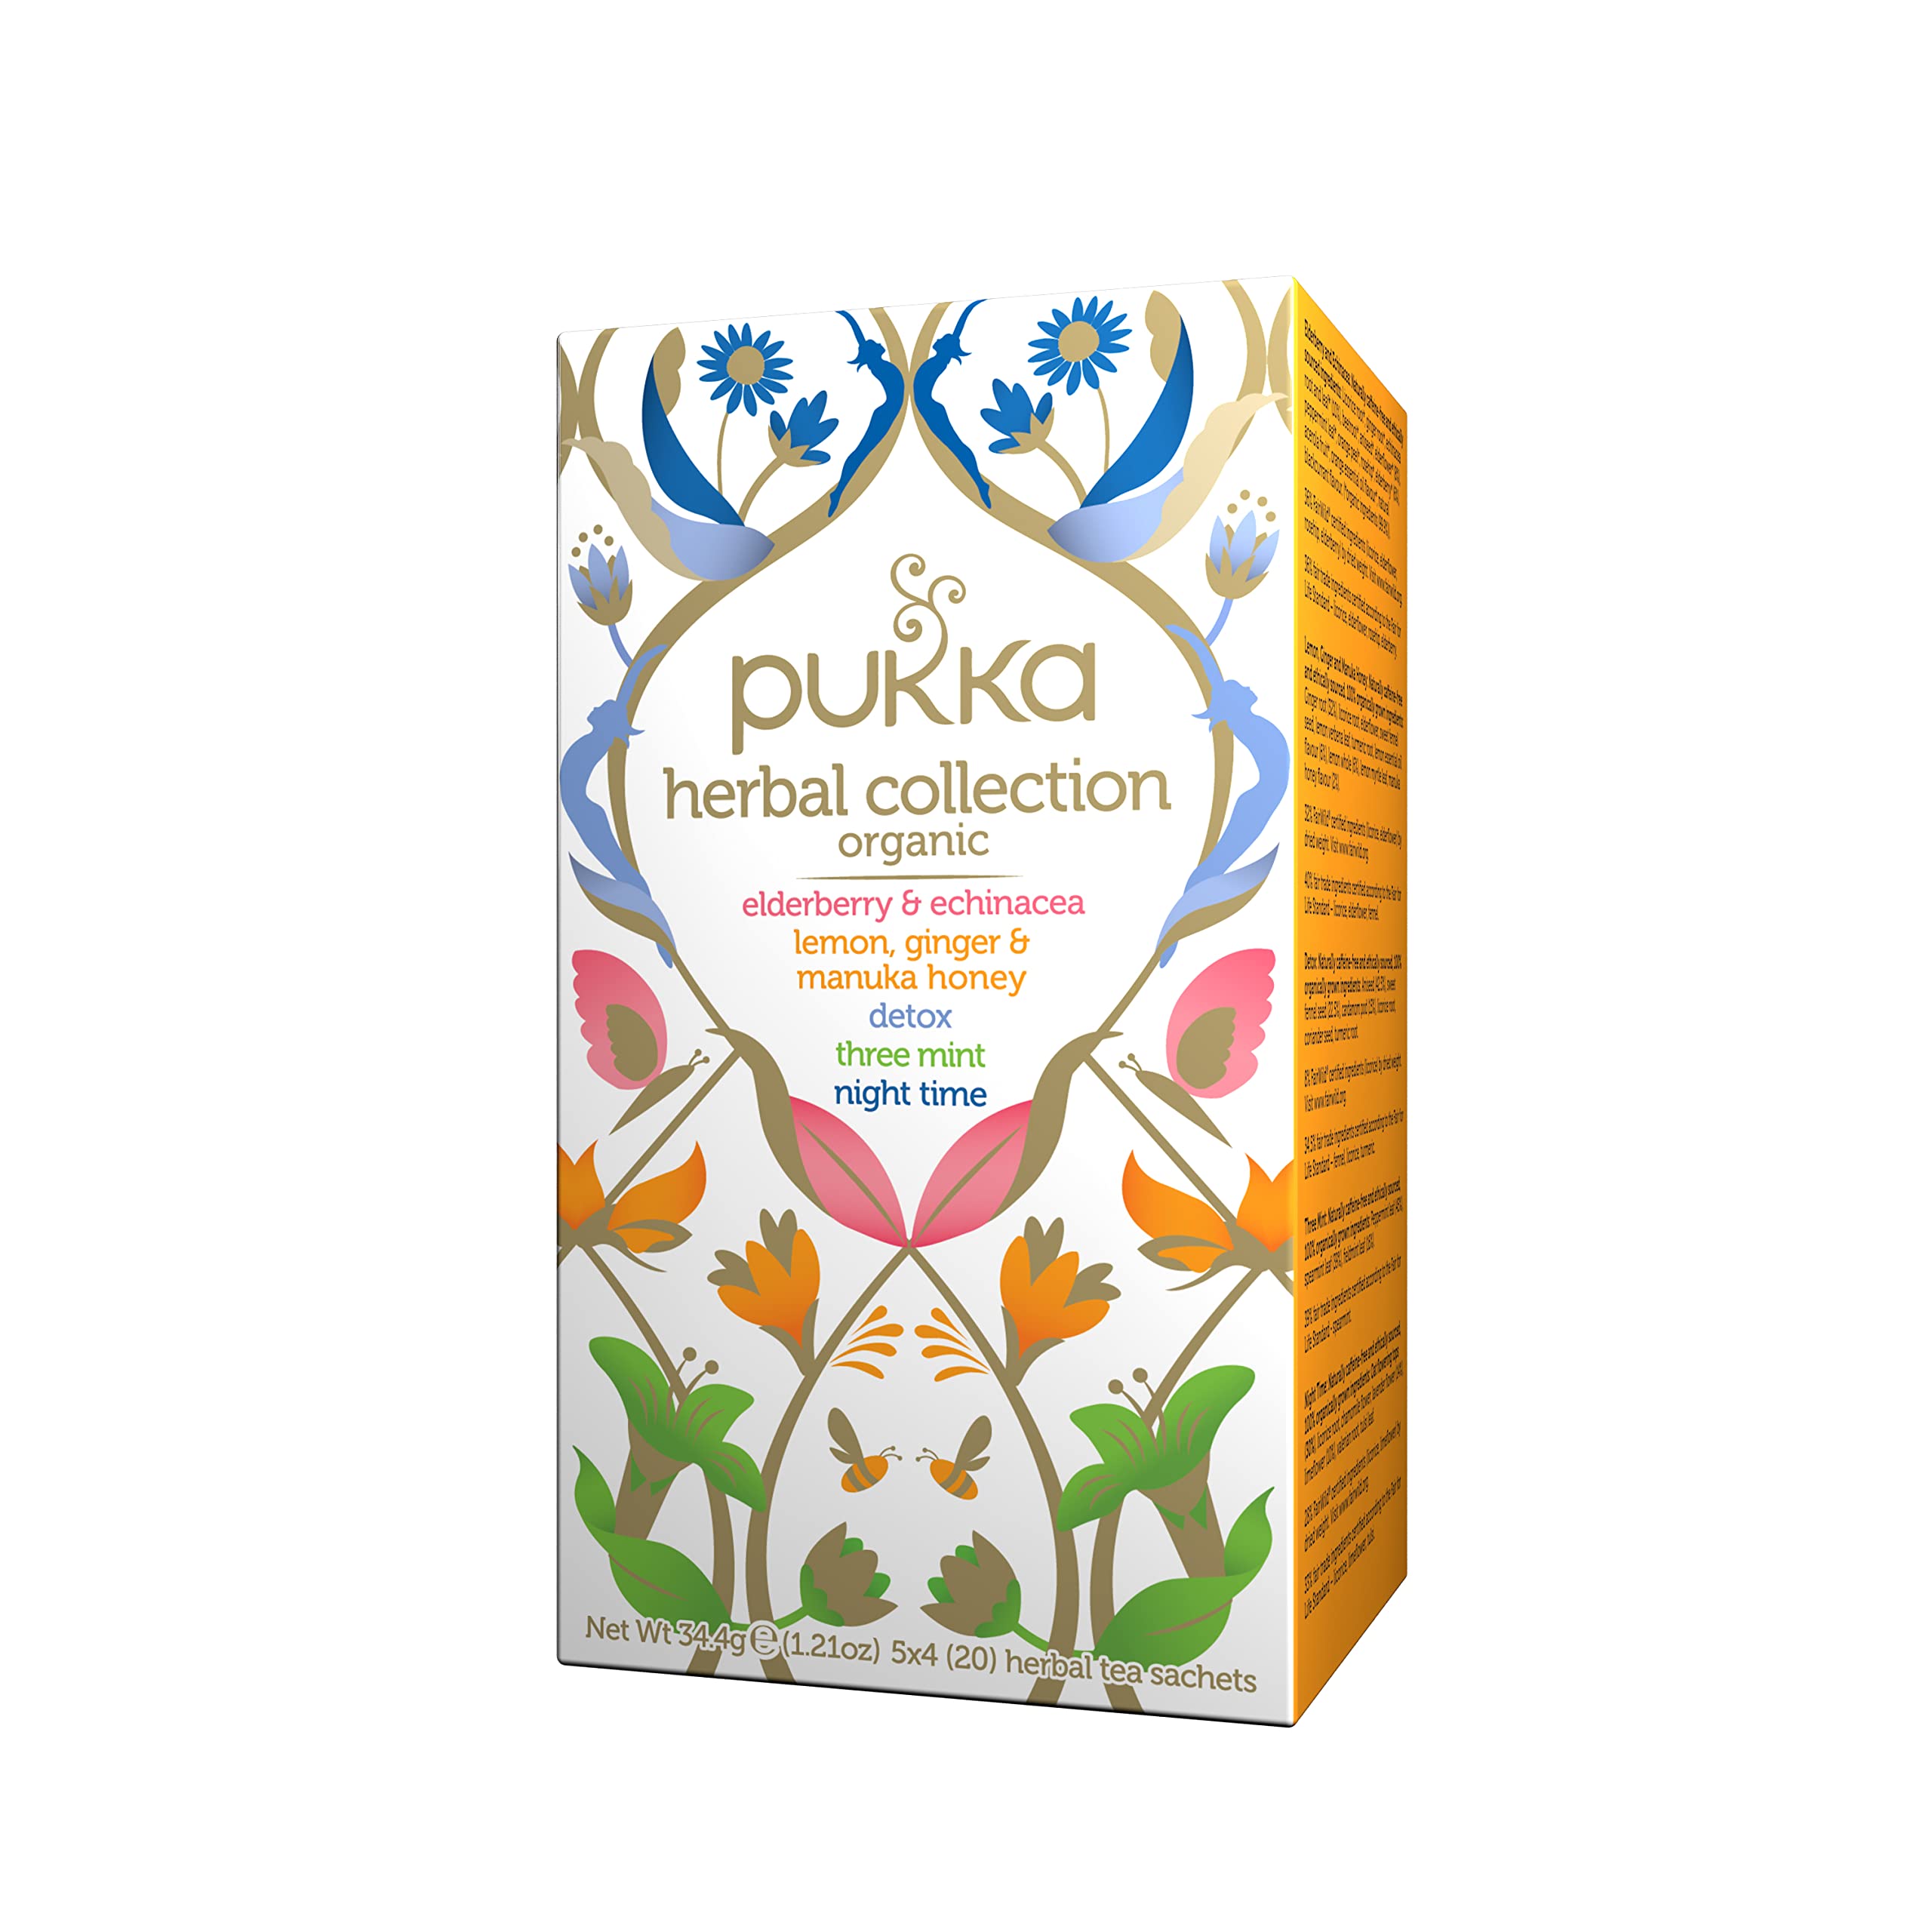 Pukka Tea Variety Pack, Organic Herbal Tea Bags, Five Flavors; Elderberry & Echinacea, Lemon, Ginger & Manuka Honey, Night Time, Three Mint and Detox, (Pack of 3), 60 Tea Bags